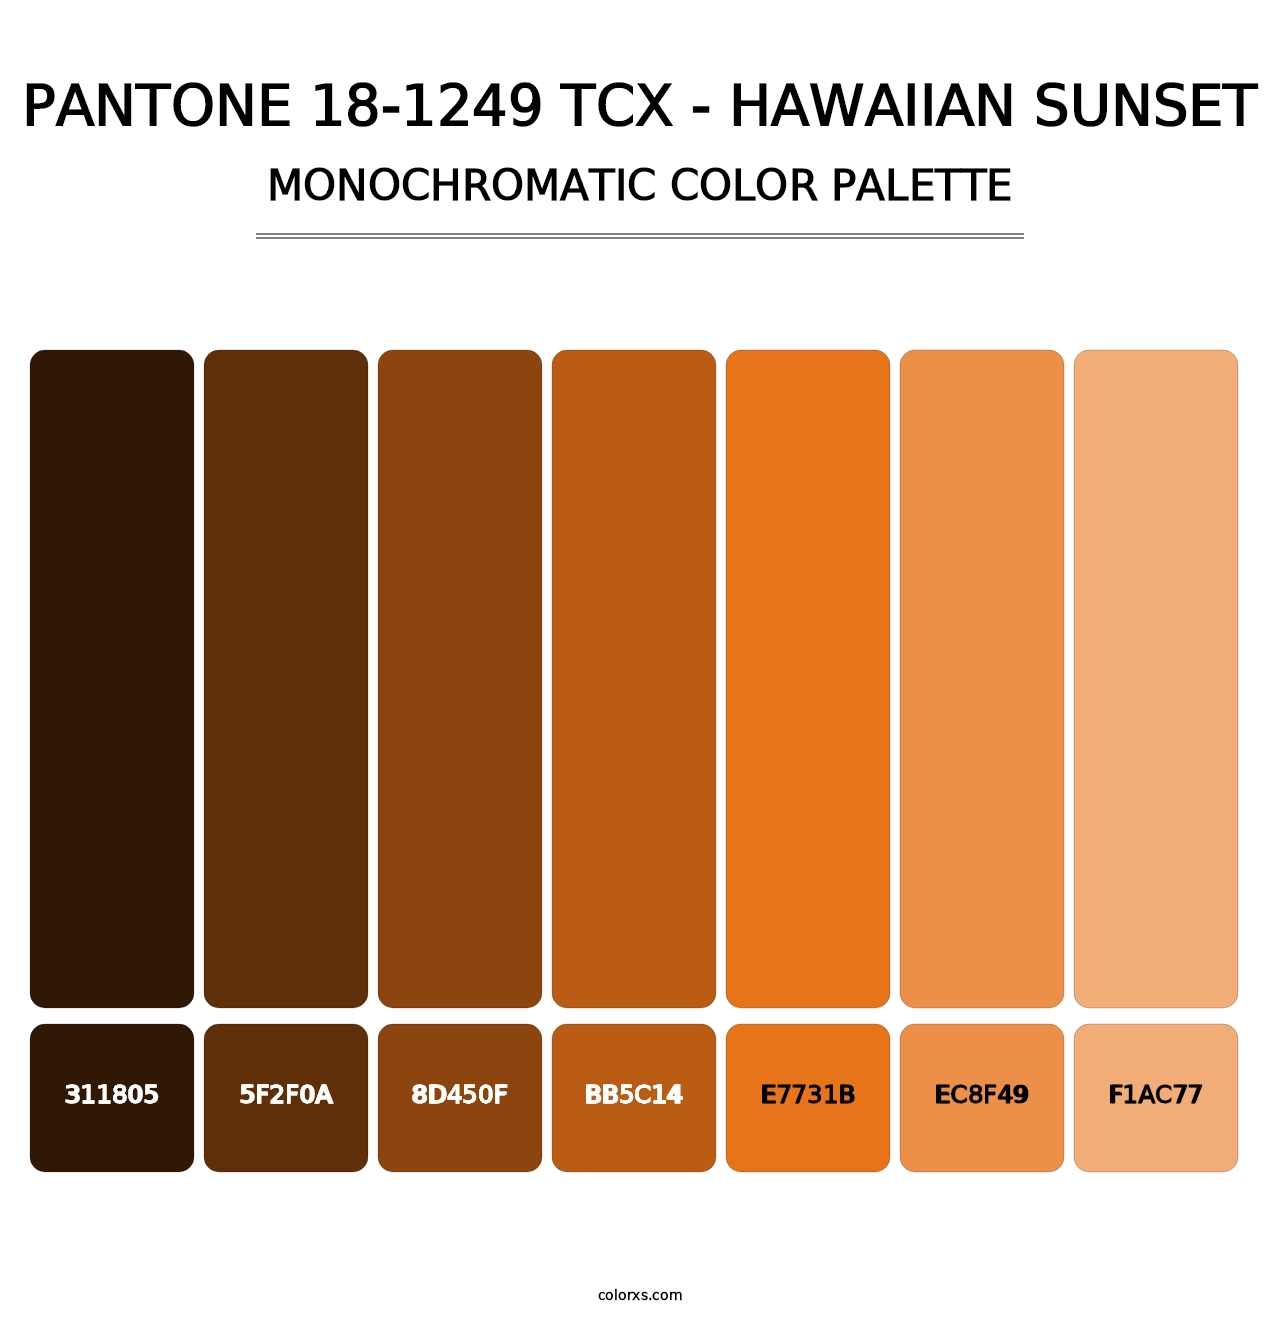 PANTONE 18-1249 TCX - Hawaiian Sunset - Monochromatic Color Palette